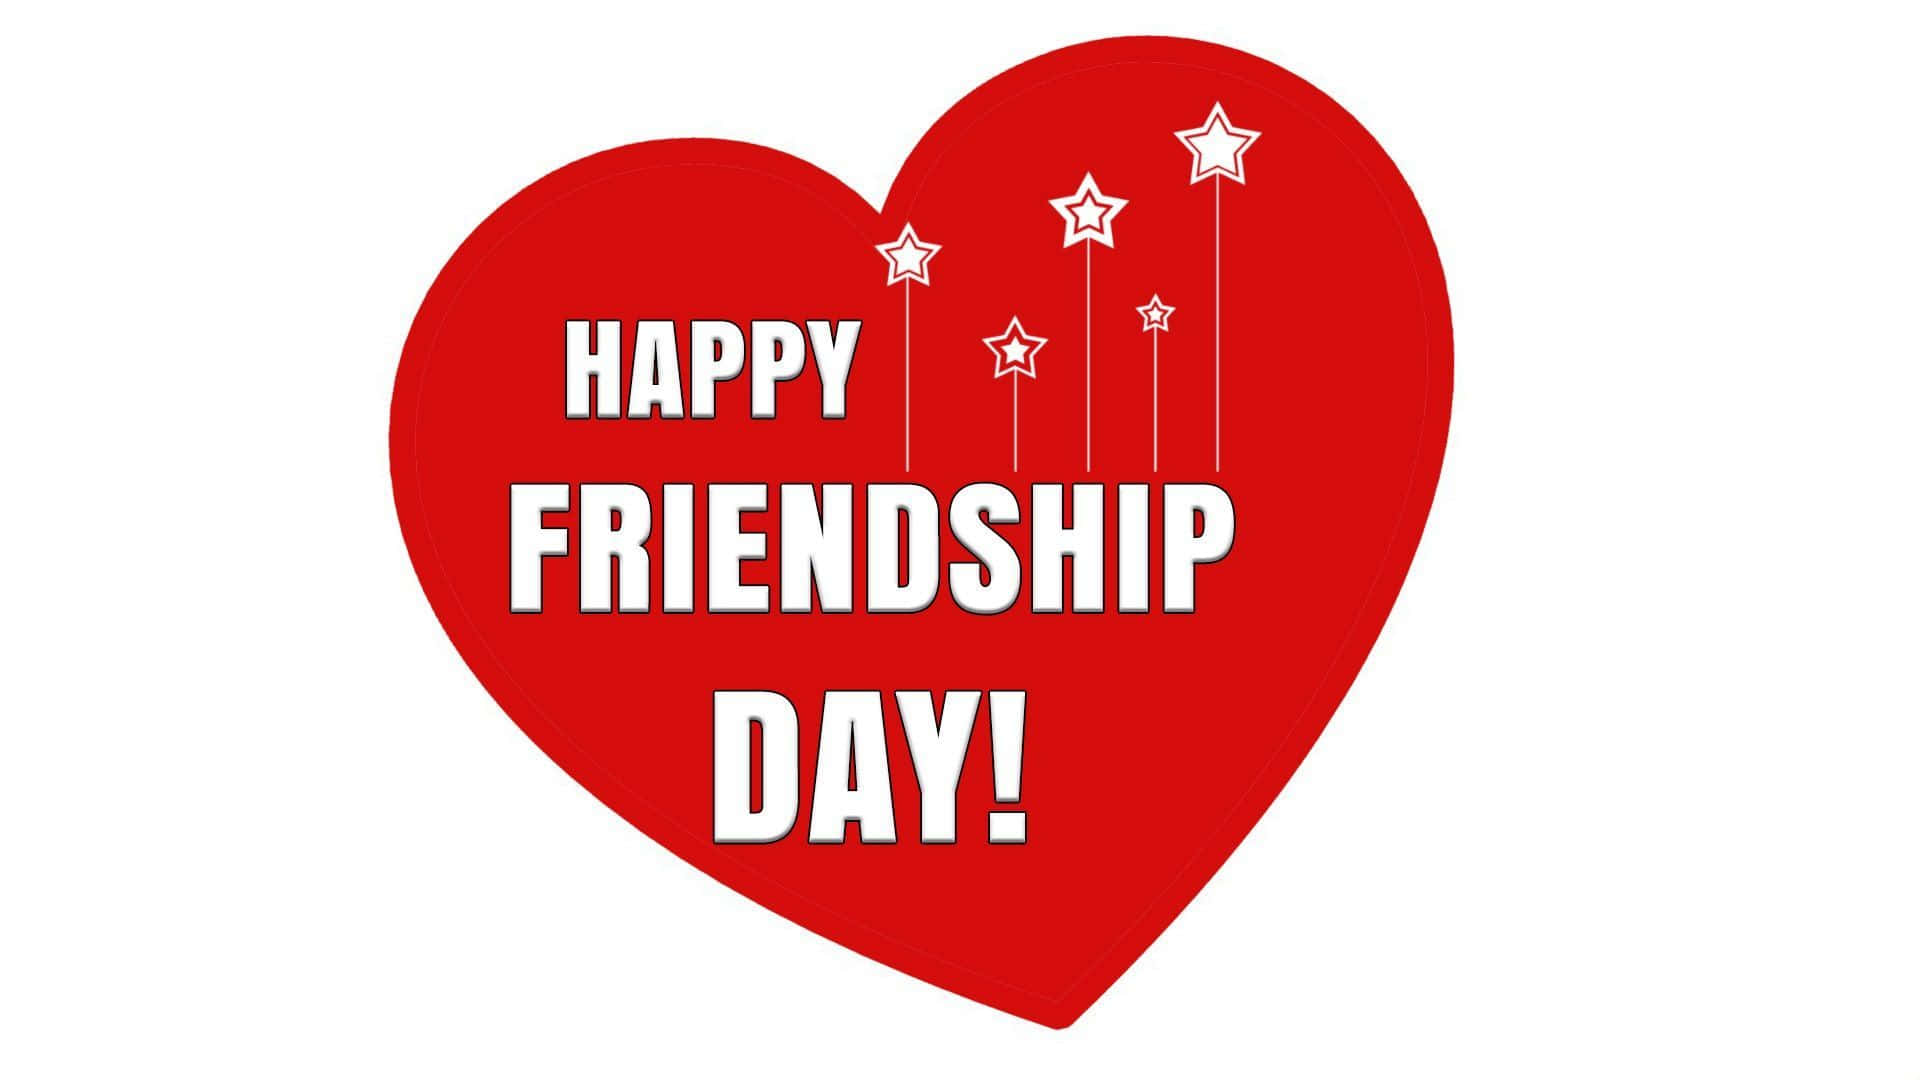 Celebrating Friendship Day with Joyful Hearts